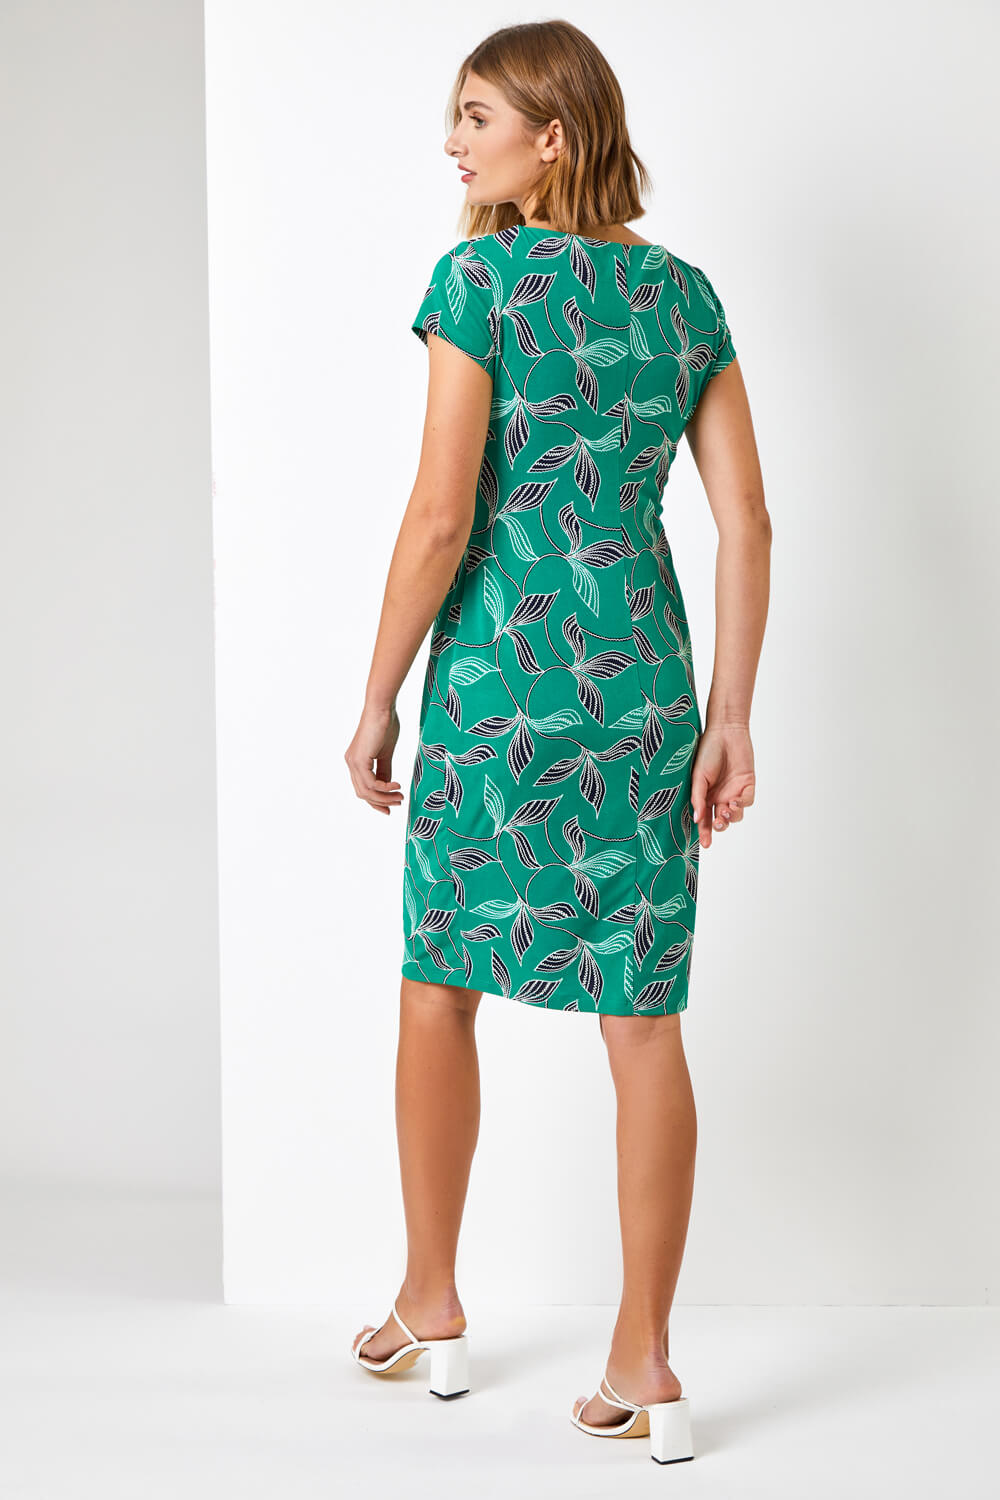 Green Leaf Print Stretch Ruched Dress, Image 2 of 4